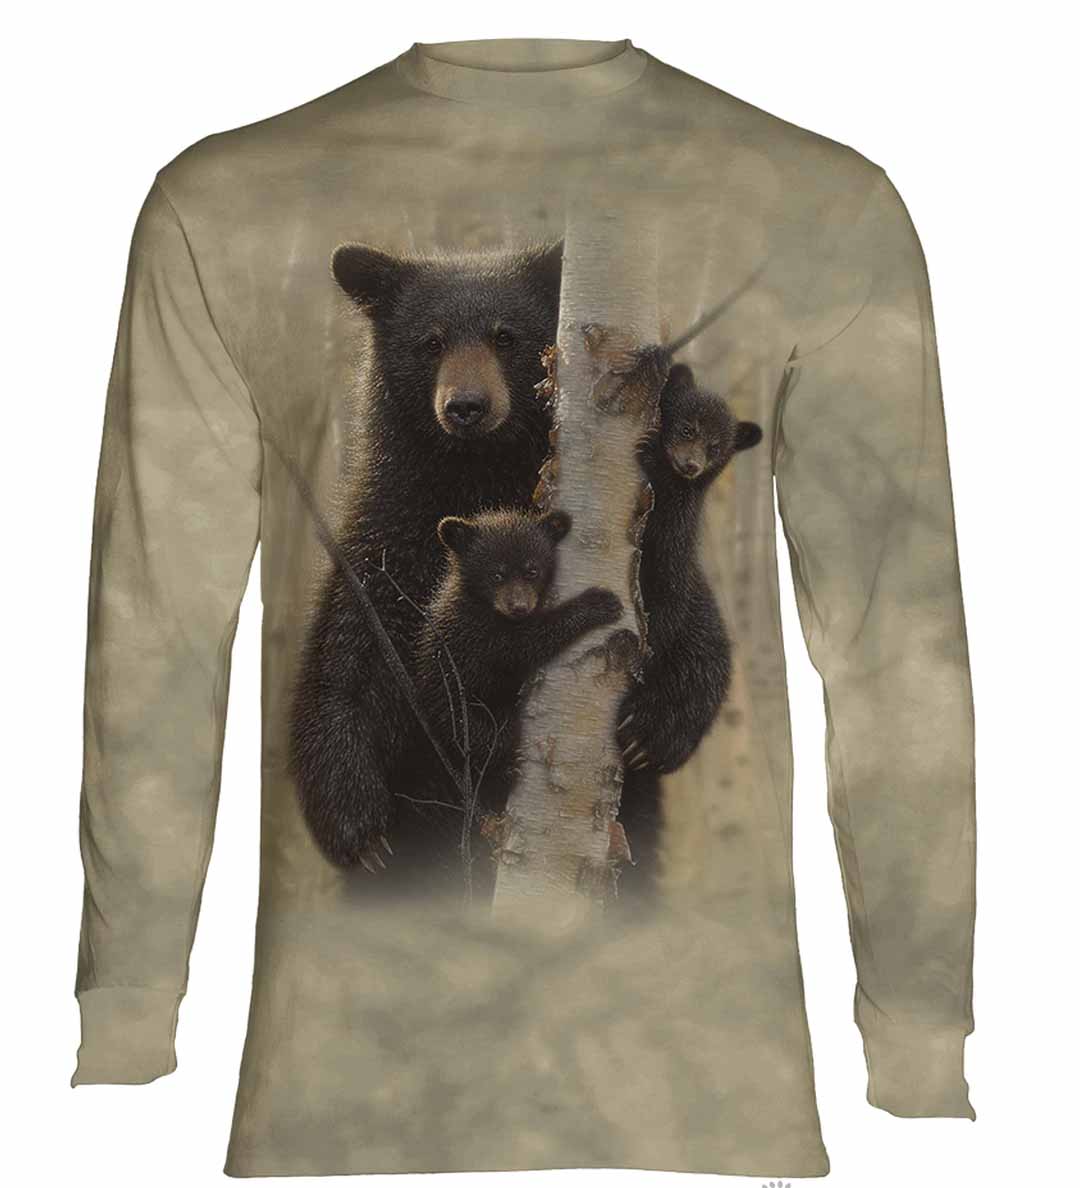 Find 13 Black Bears Long Sleeve T-Shirt by The Mountain Bear Tee S-2XL